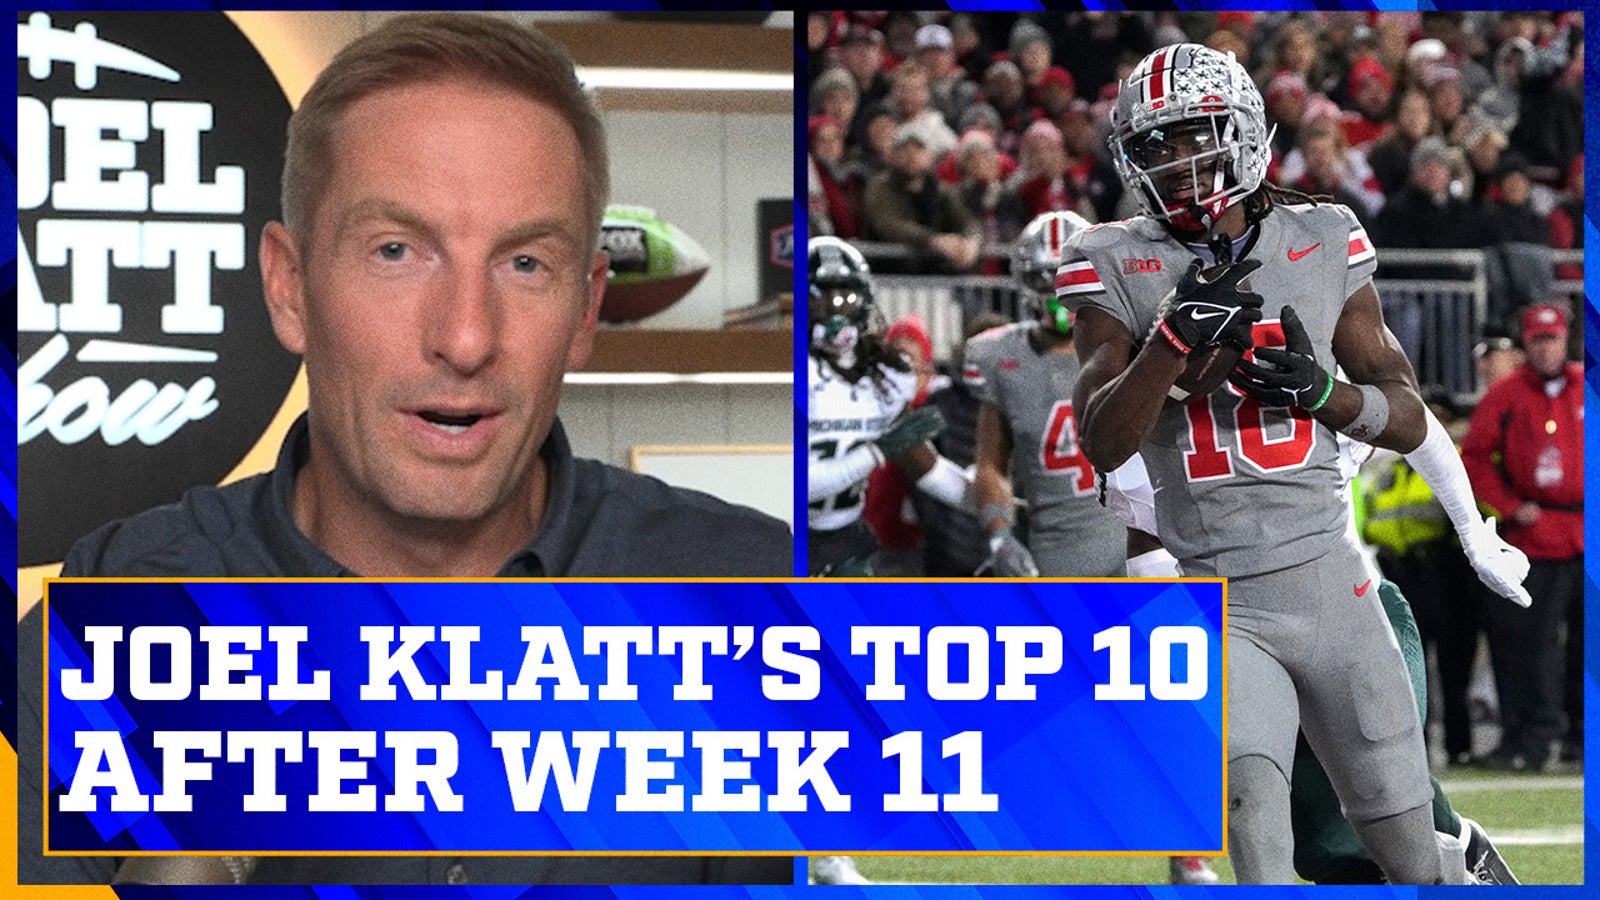 Florida State ranked behind Texas and Alabama in Joel Klatt's top 10